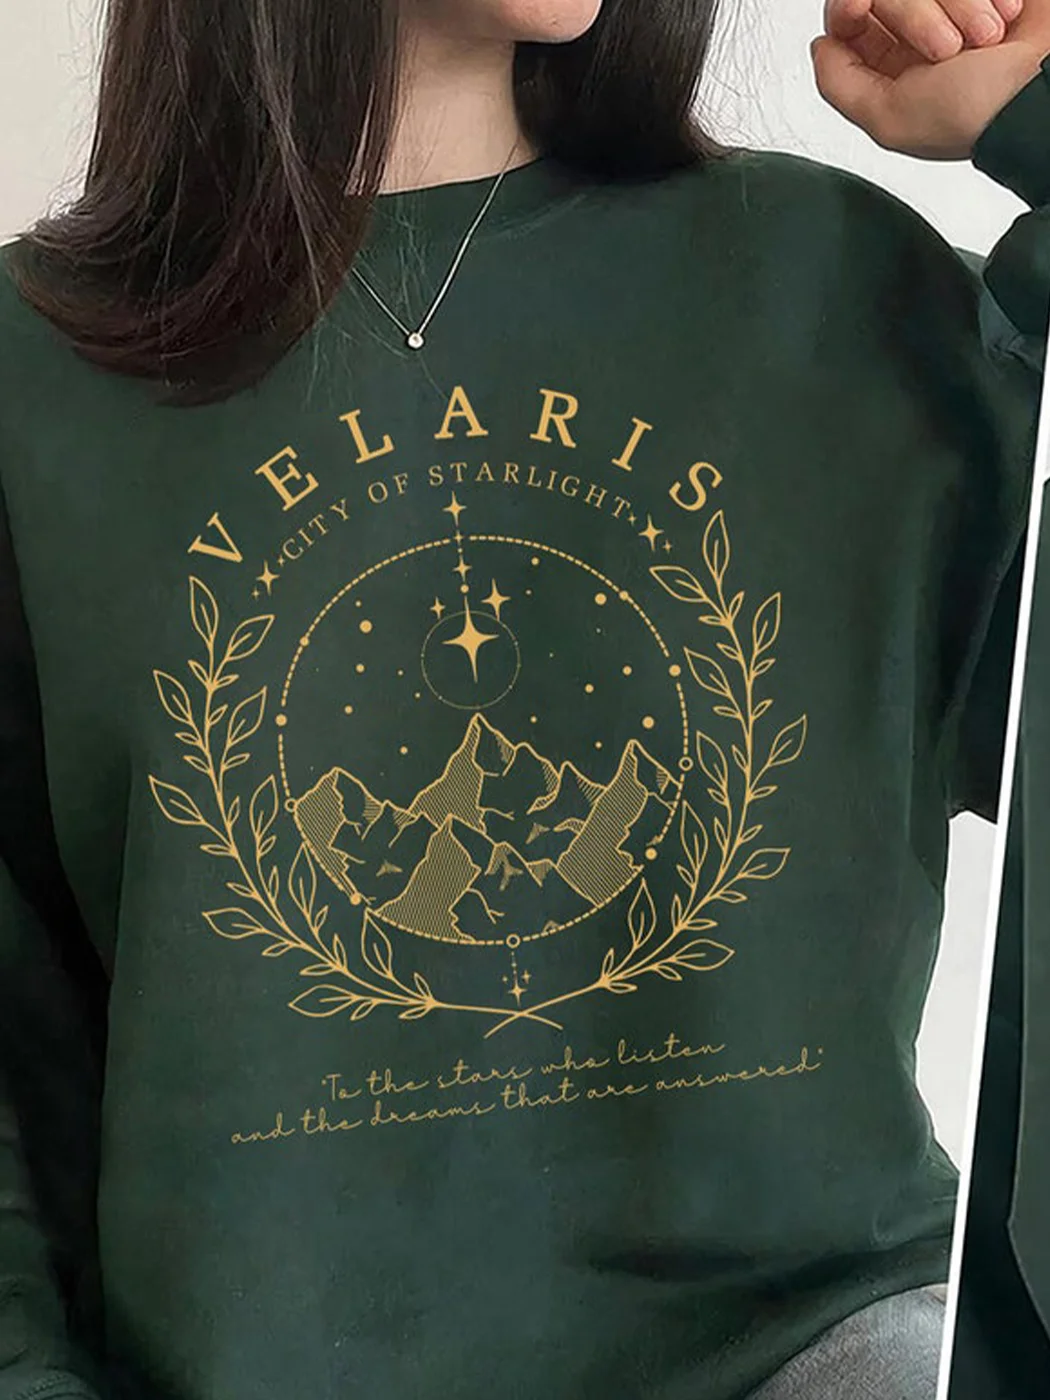 Velaris Sweatshirt, Velaris City Of Starlight Shirt / DarkAcademias /Darkacademias